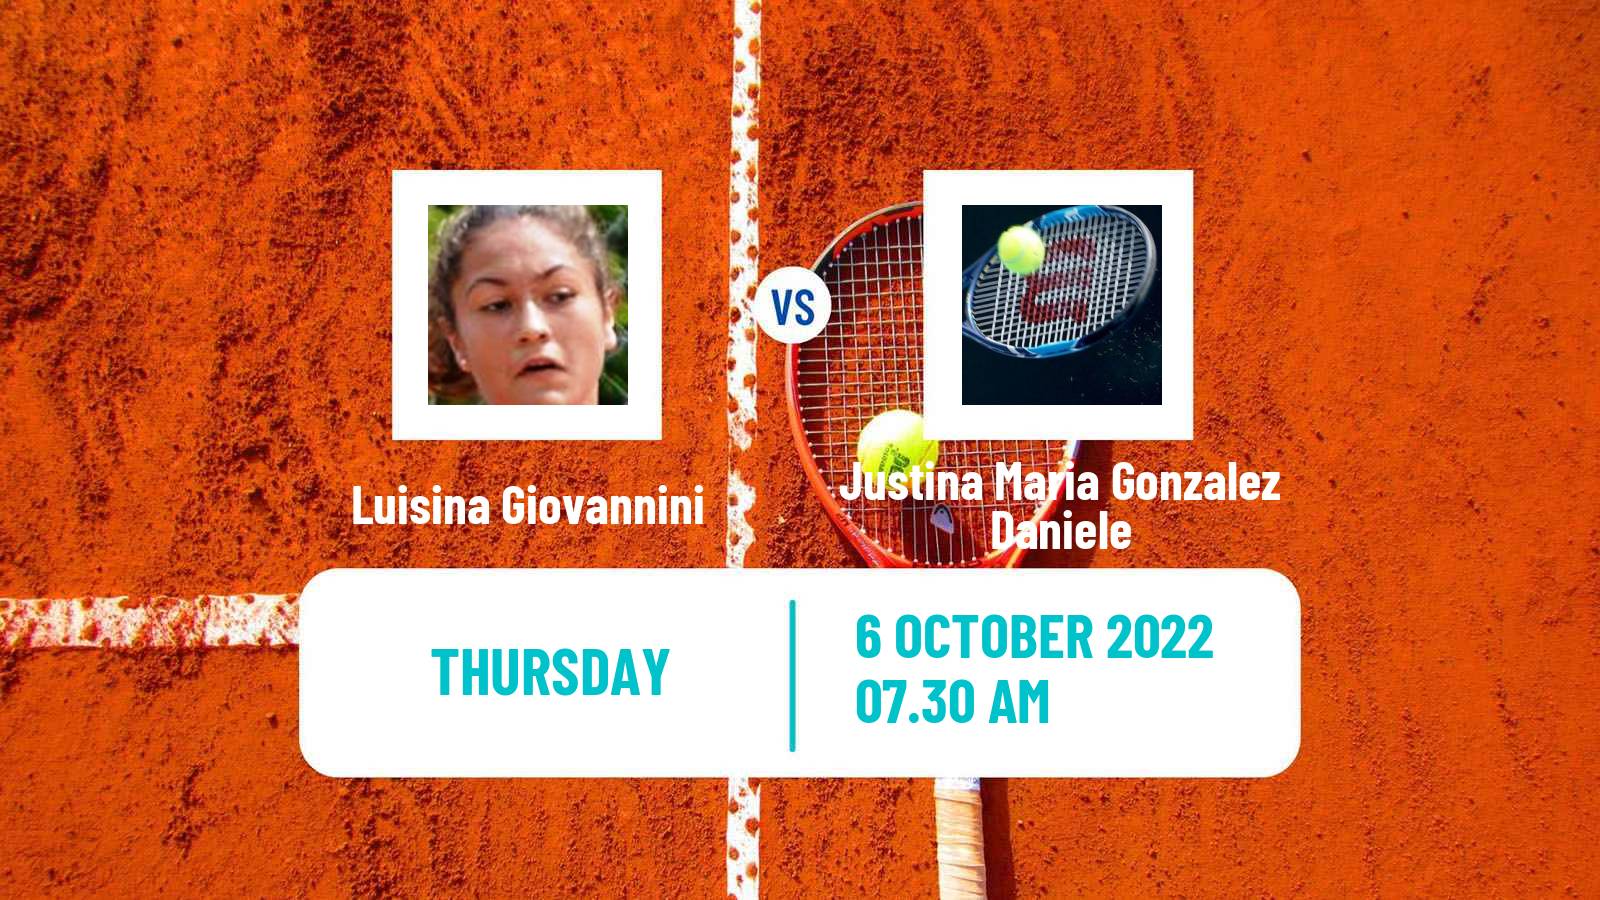 Tennis ITF Tournaments Luisina Giovannini - Justina Maria Gonzalez Daniele